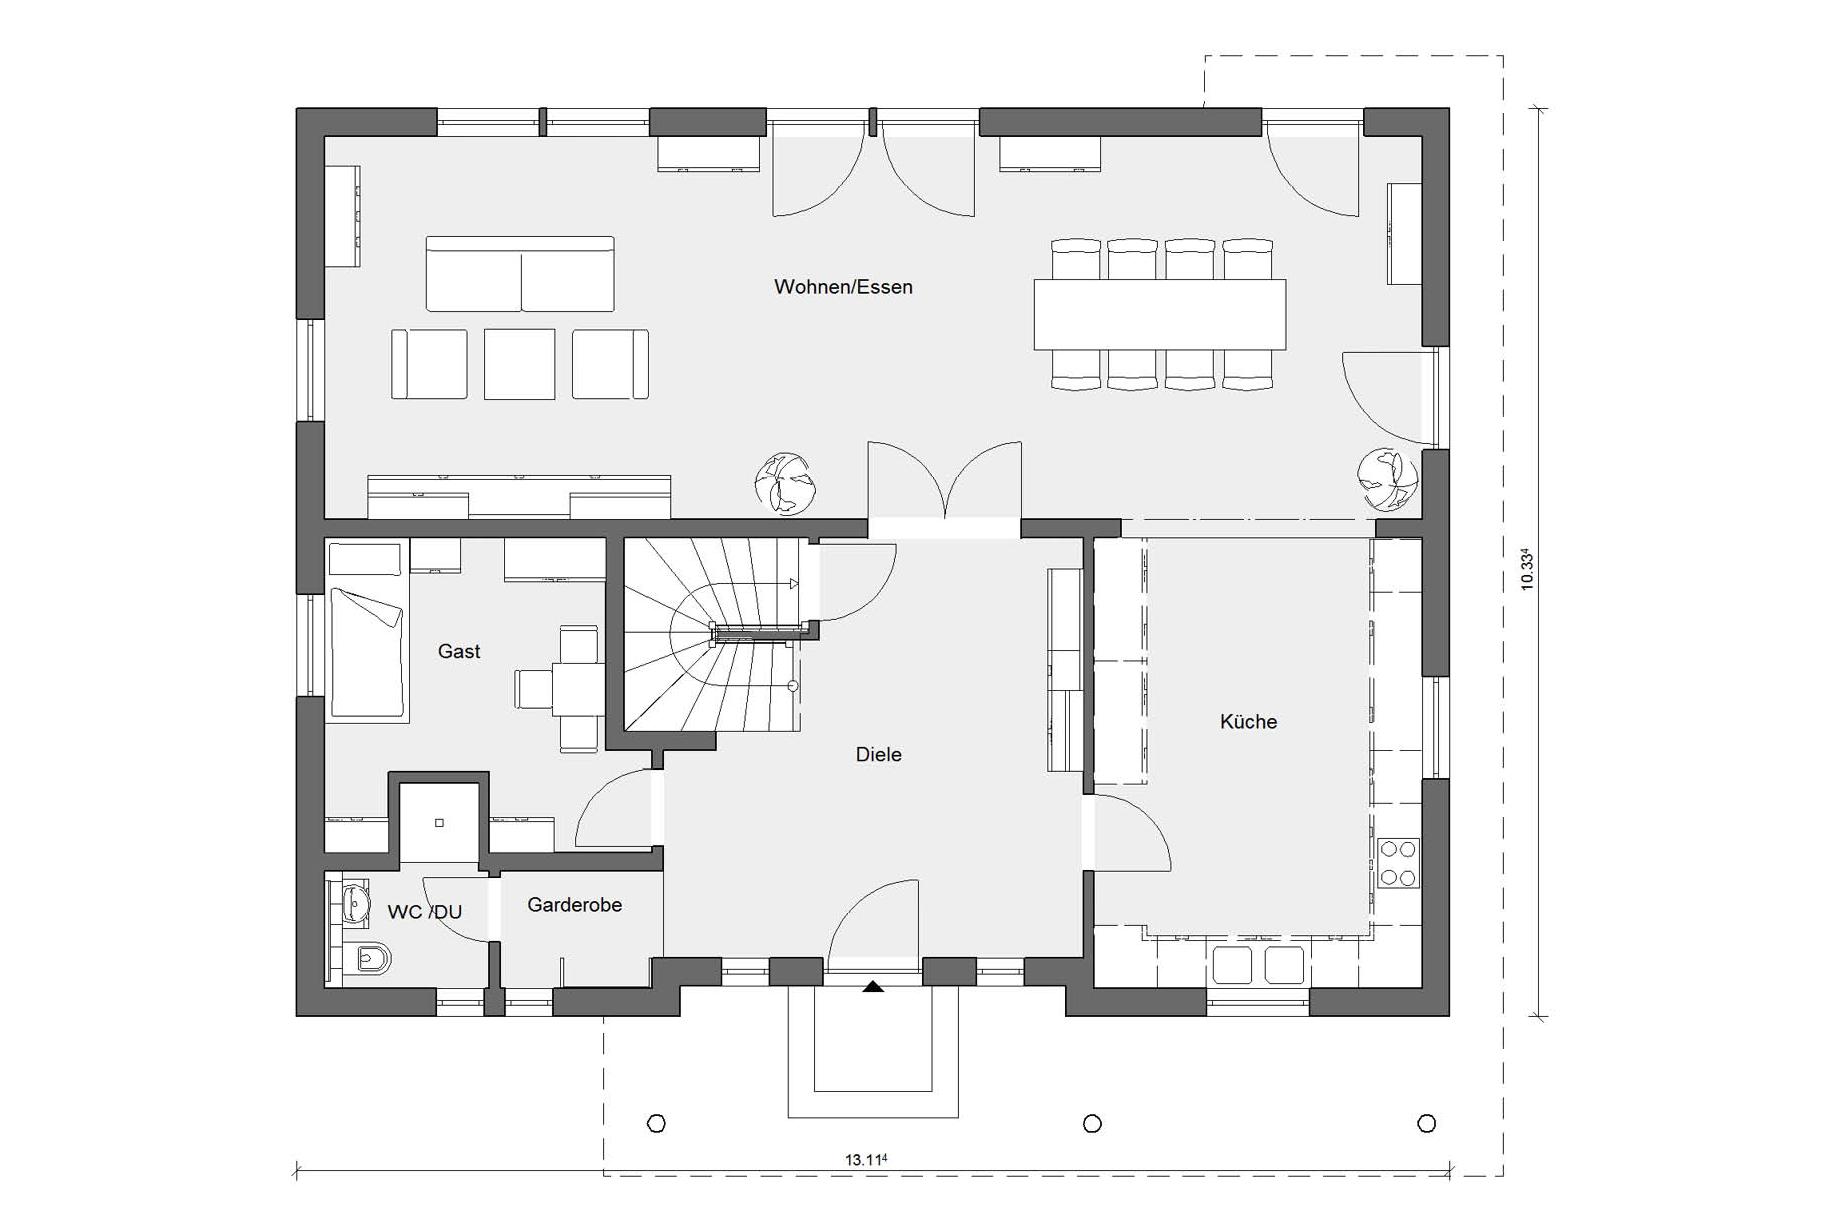 Floor plan ground floor Mediterranean villa E 20-204.1